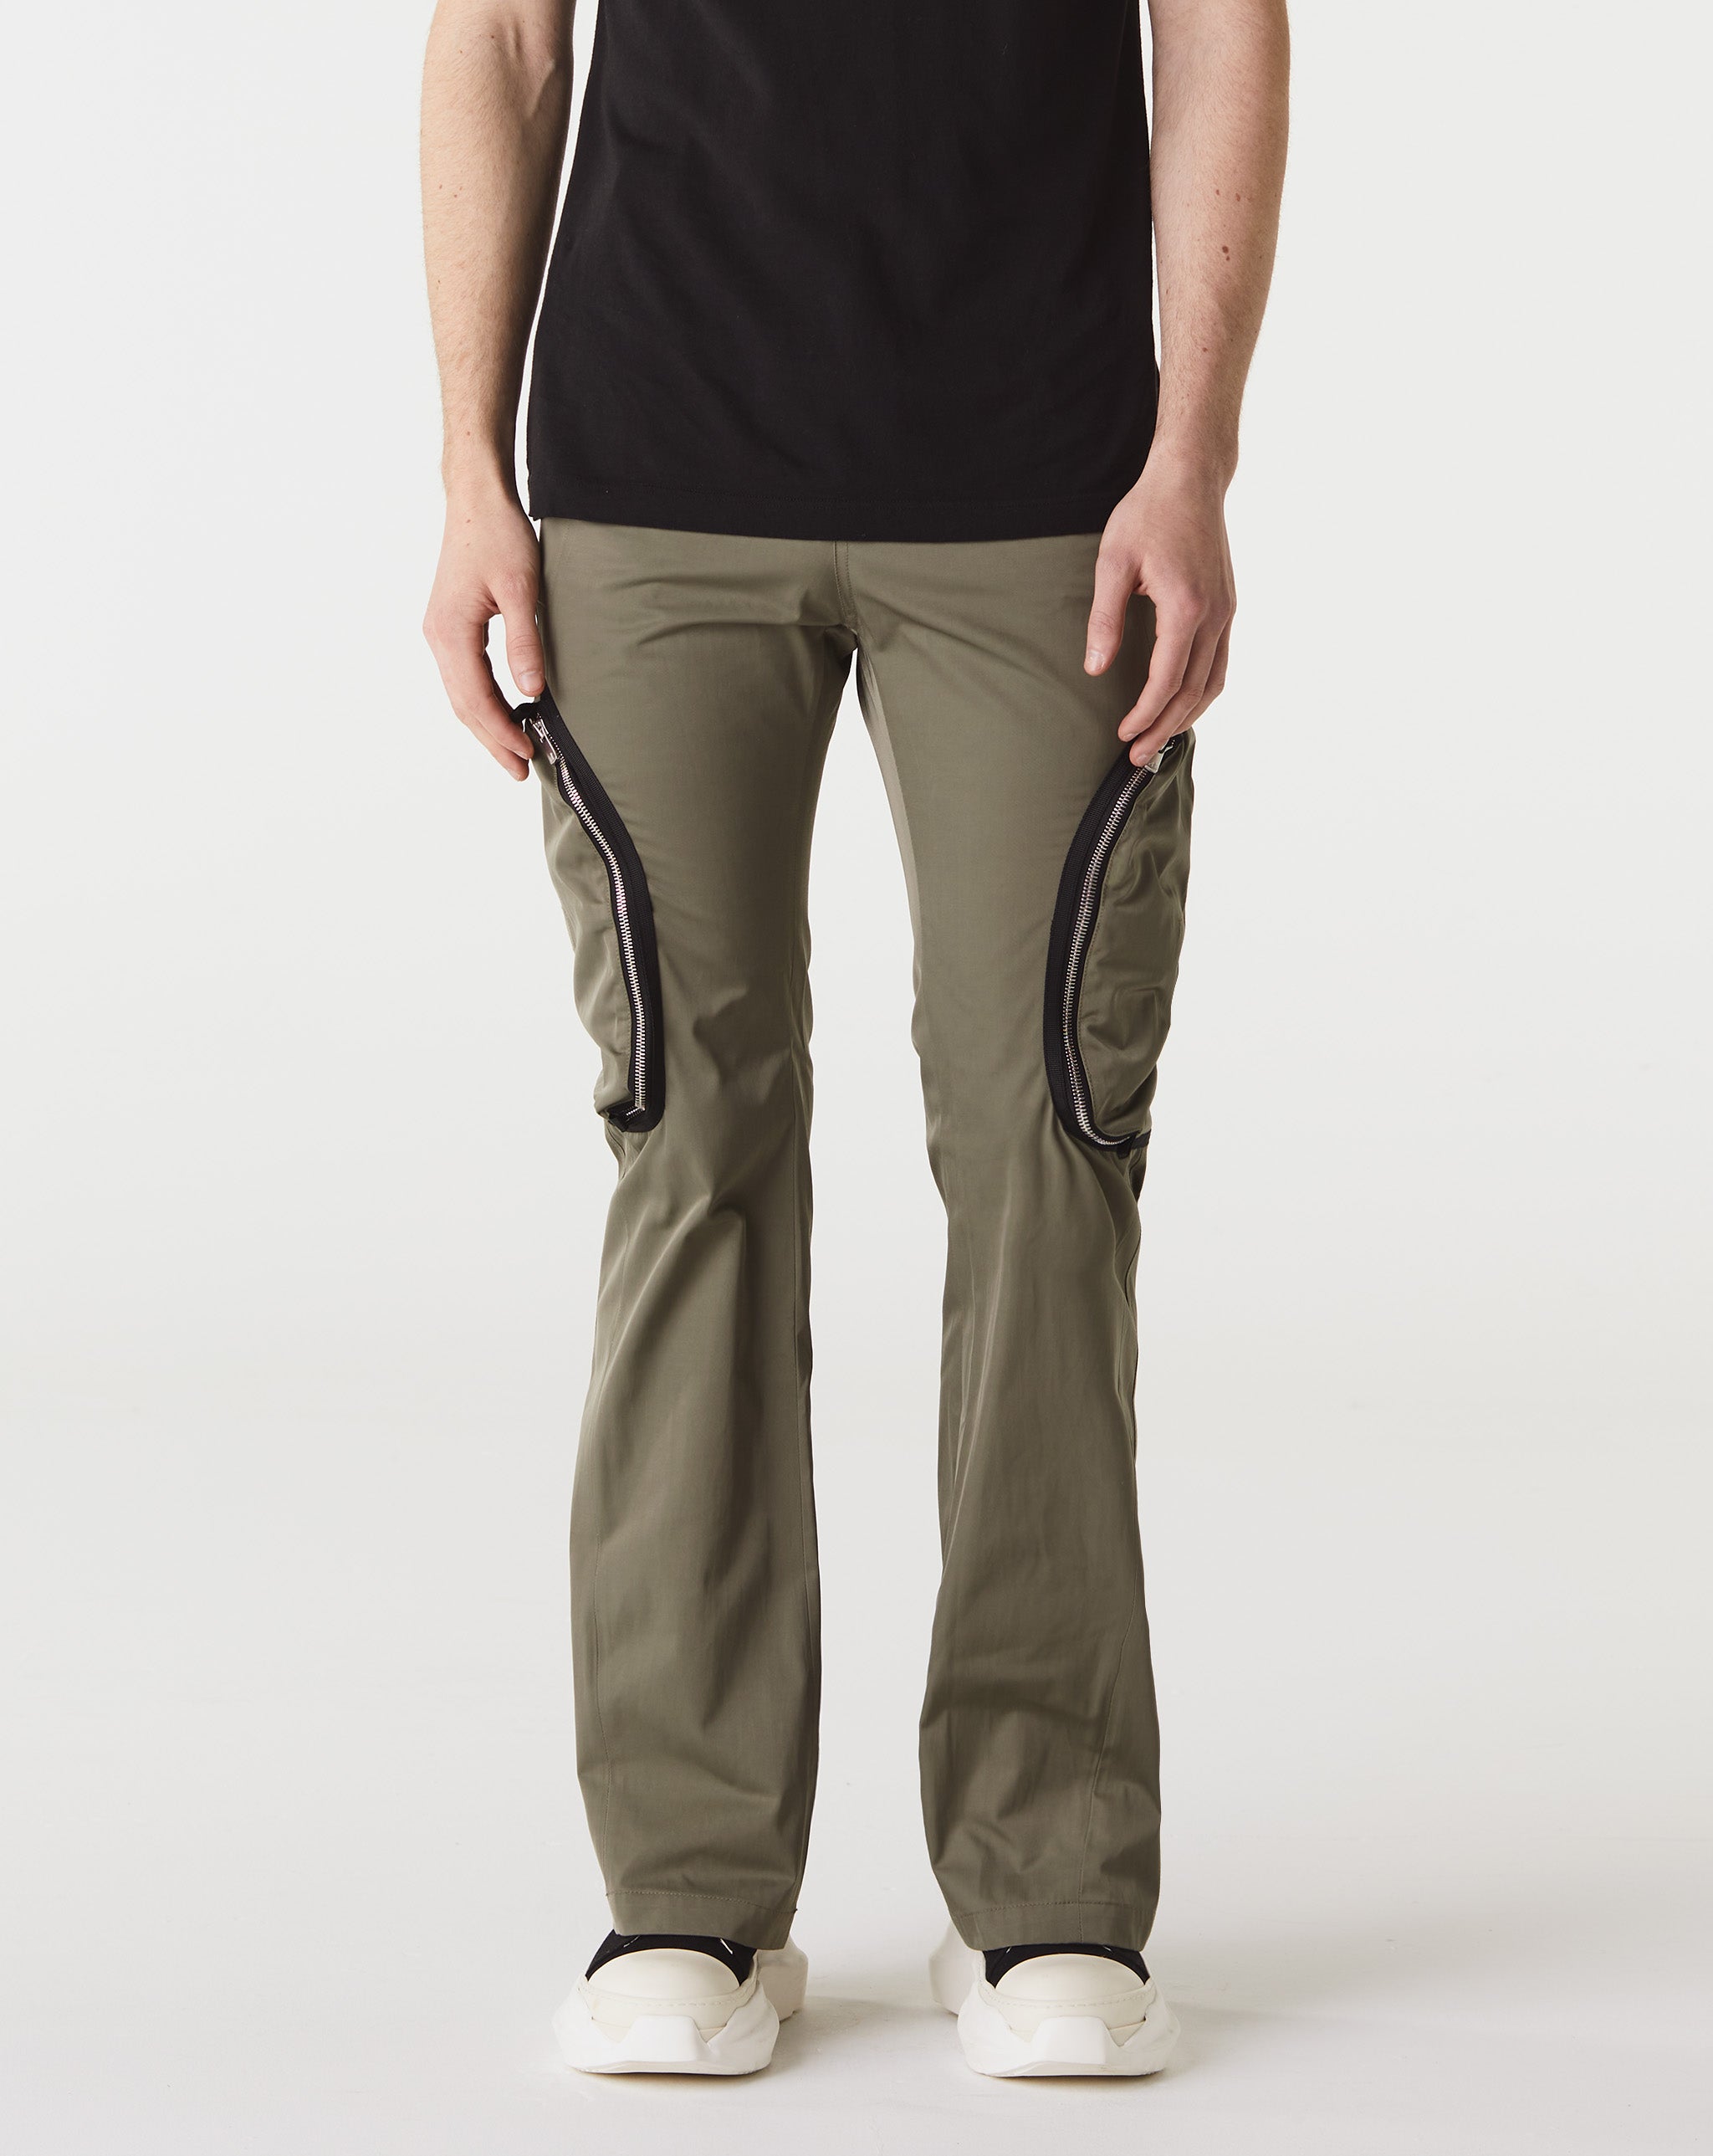 FFFPOSTALSERVICE monse grey camouflage jeans  - Cheap Cerbe Jordan outlet